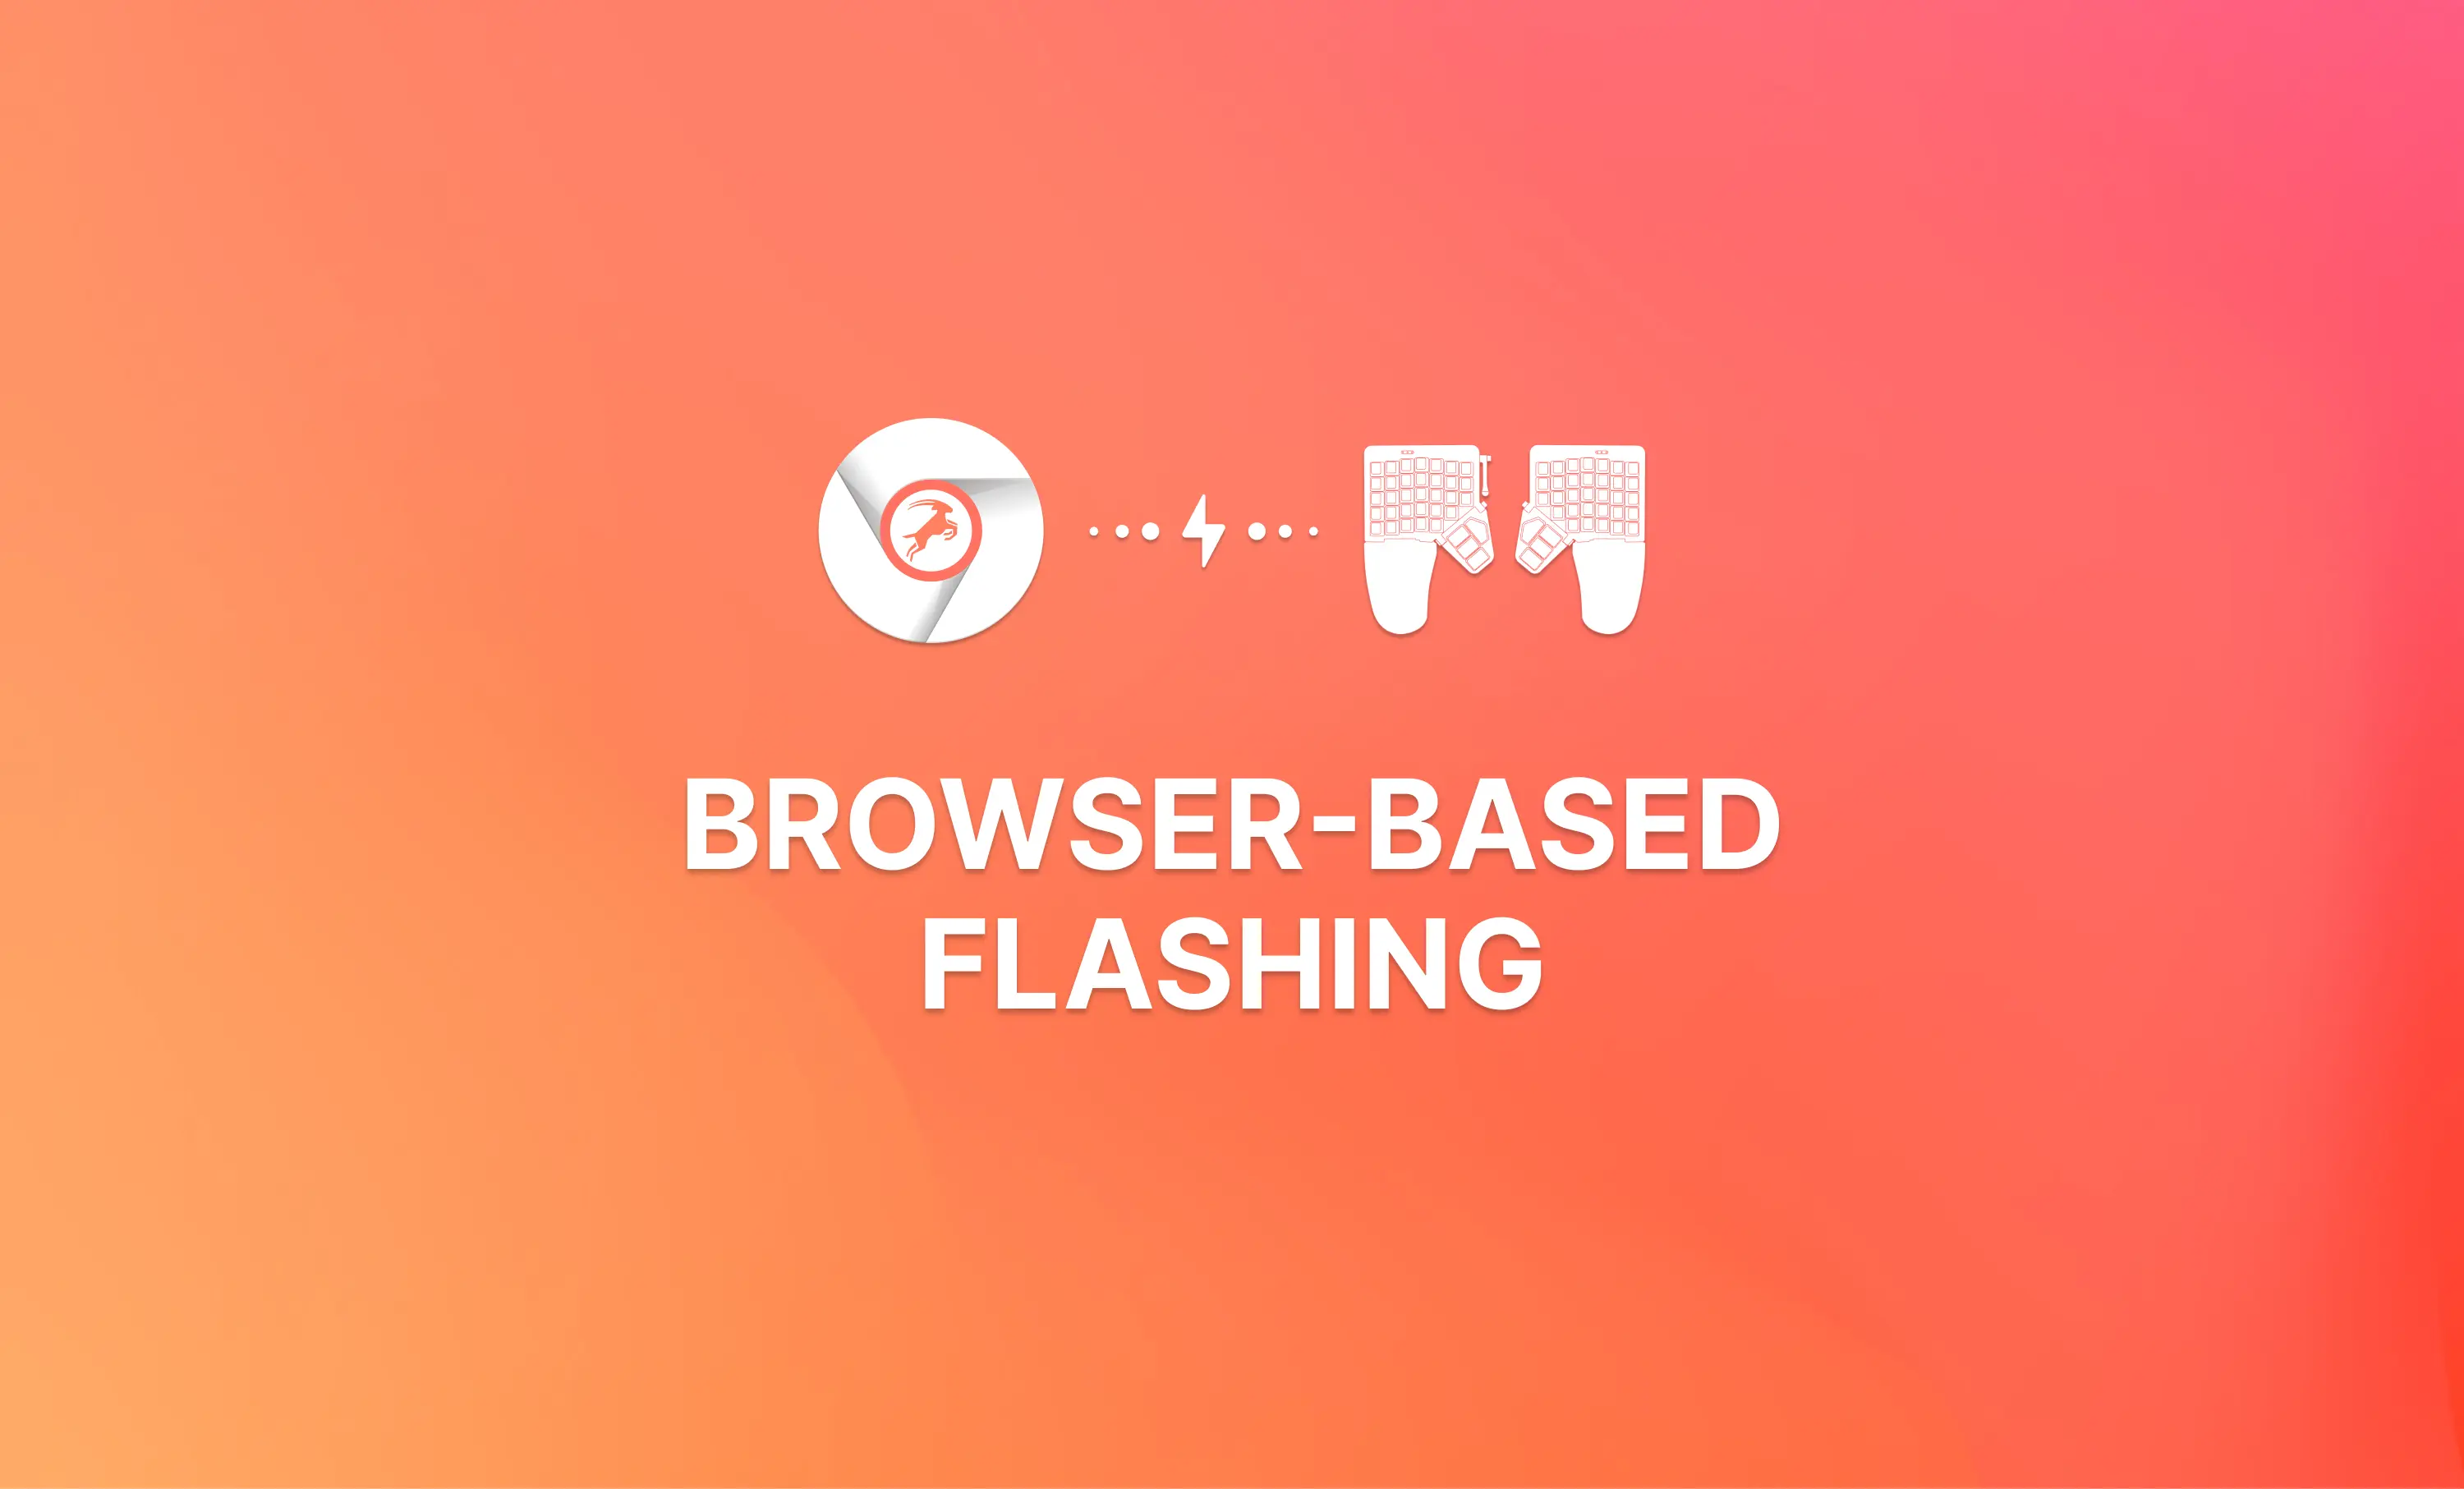 Introducing Browser-Based Flashing